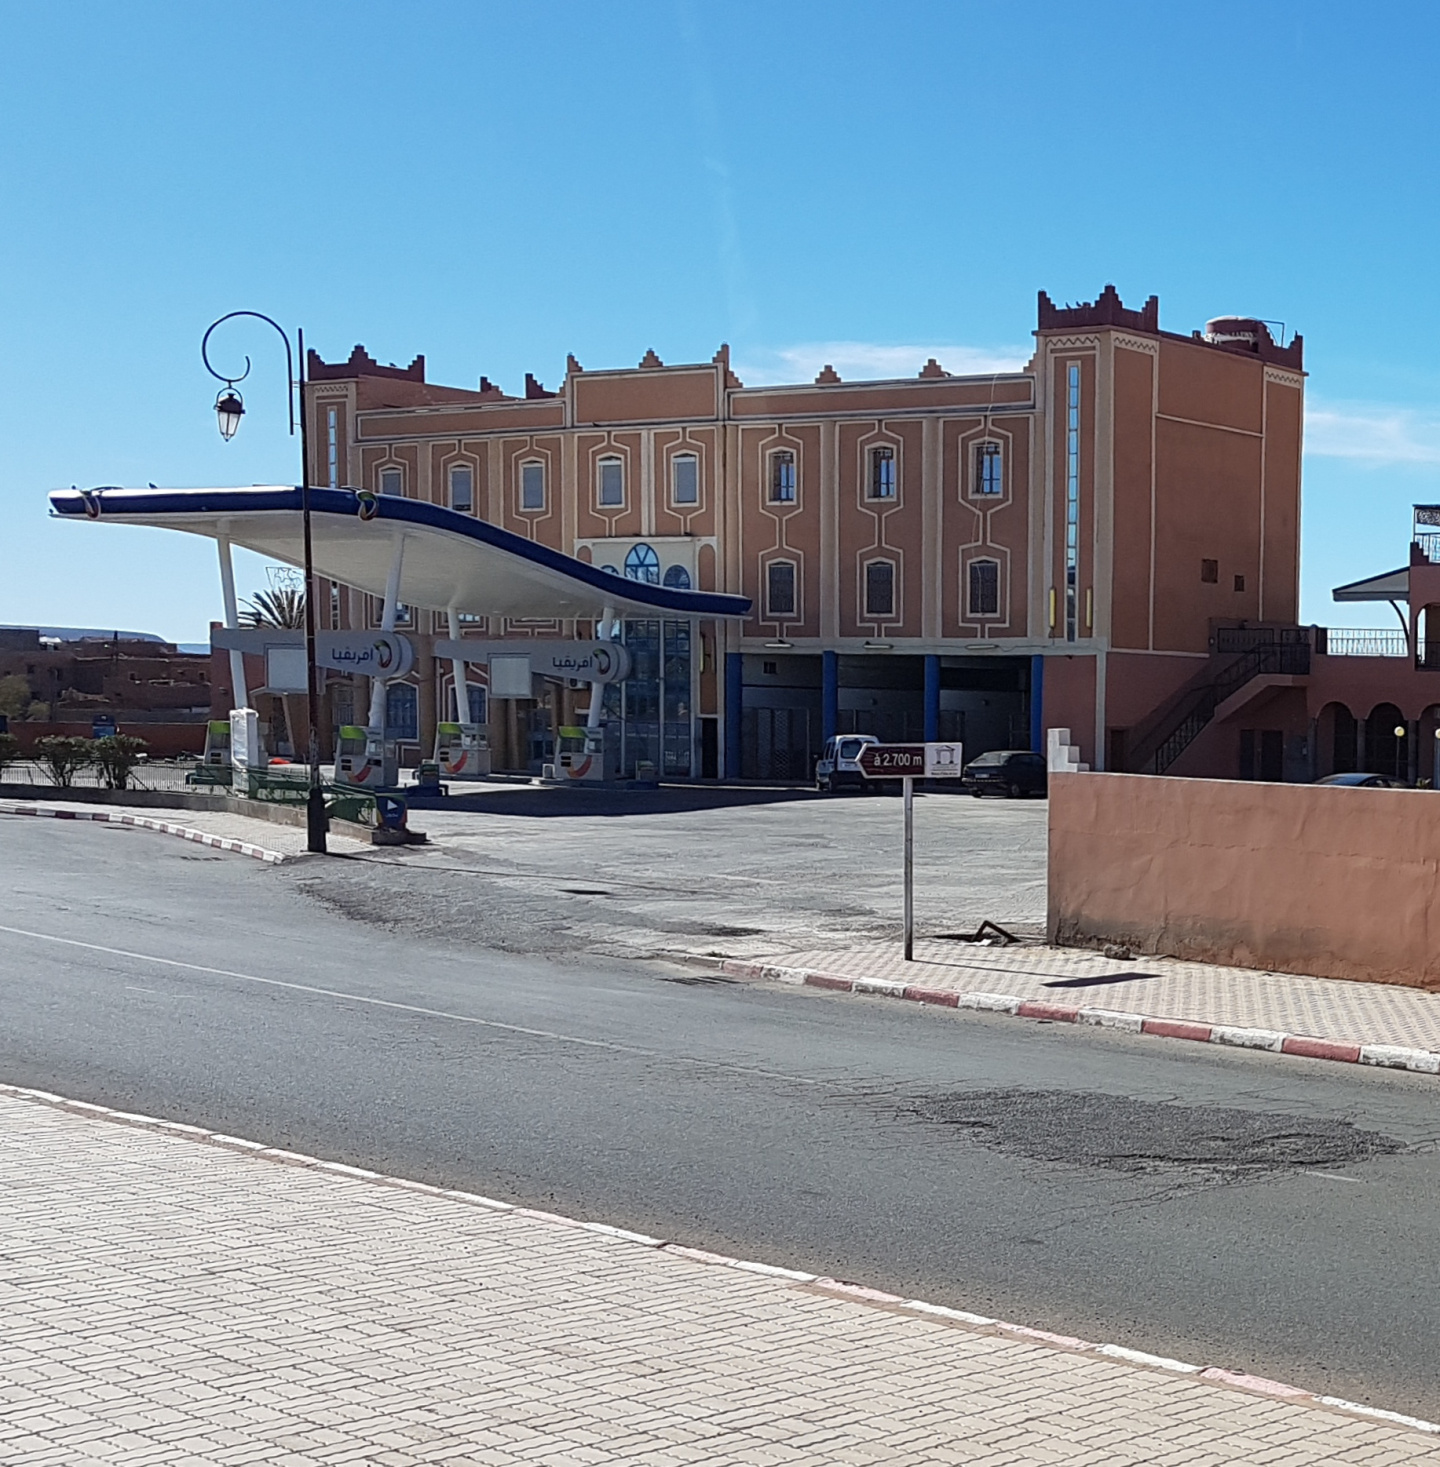 20180311-093921-Ouarzazate-SJ-2-r.jpg